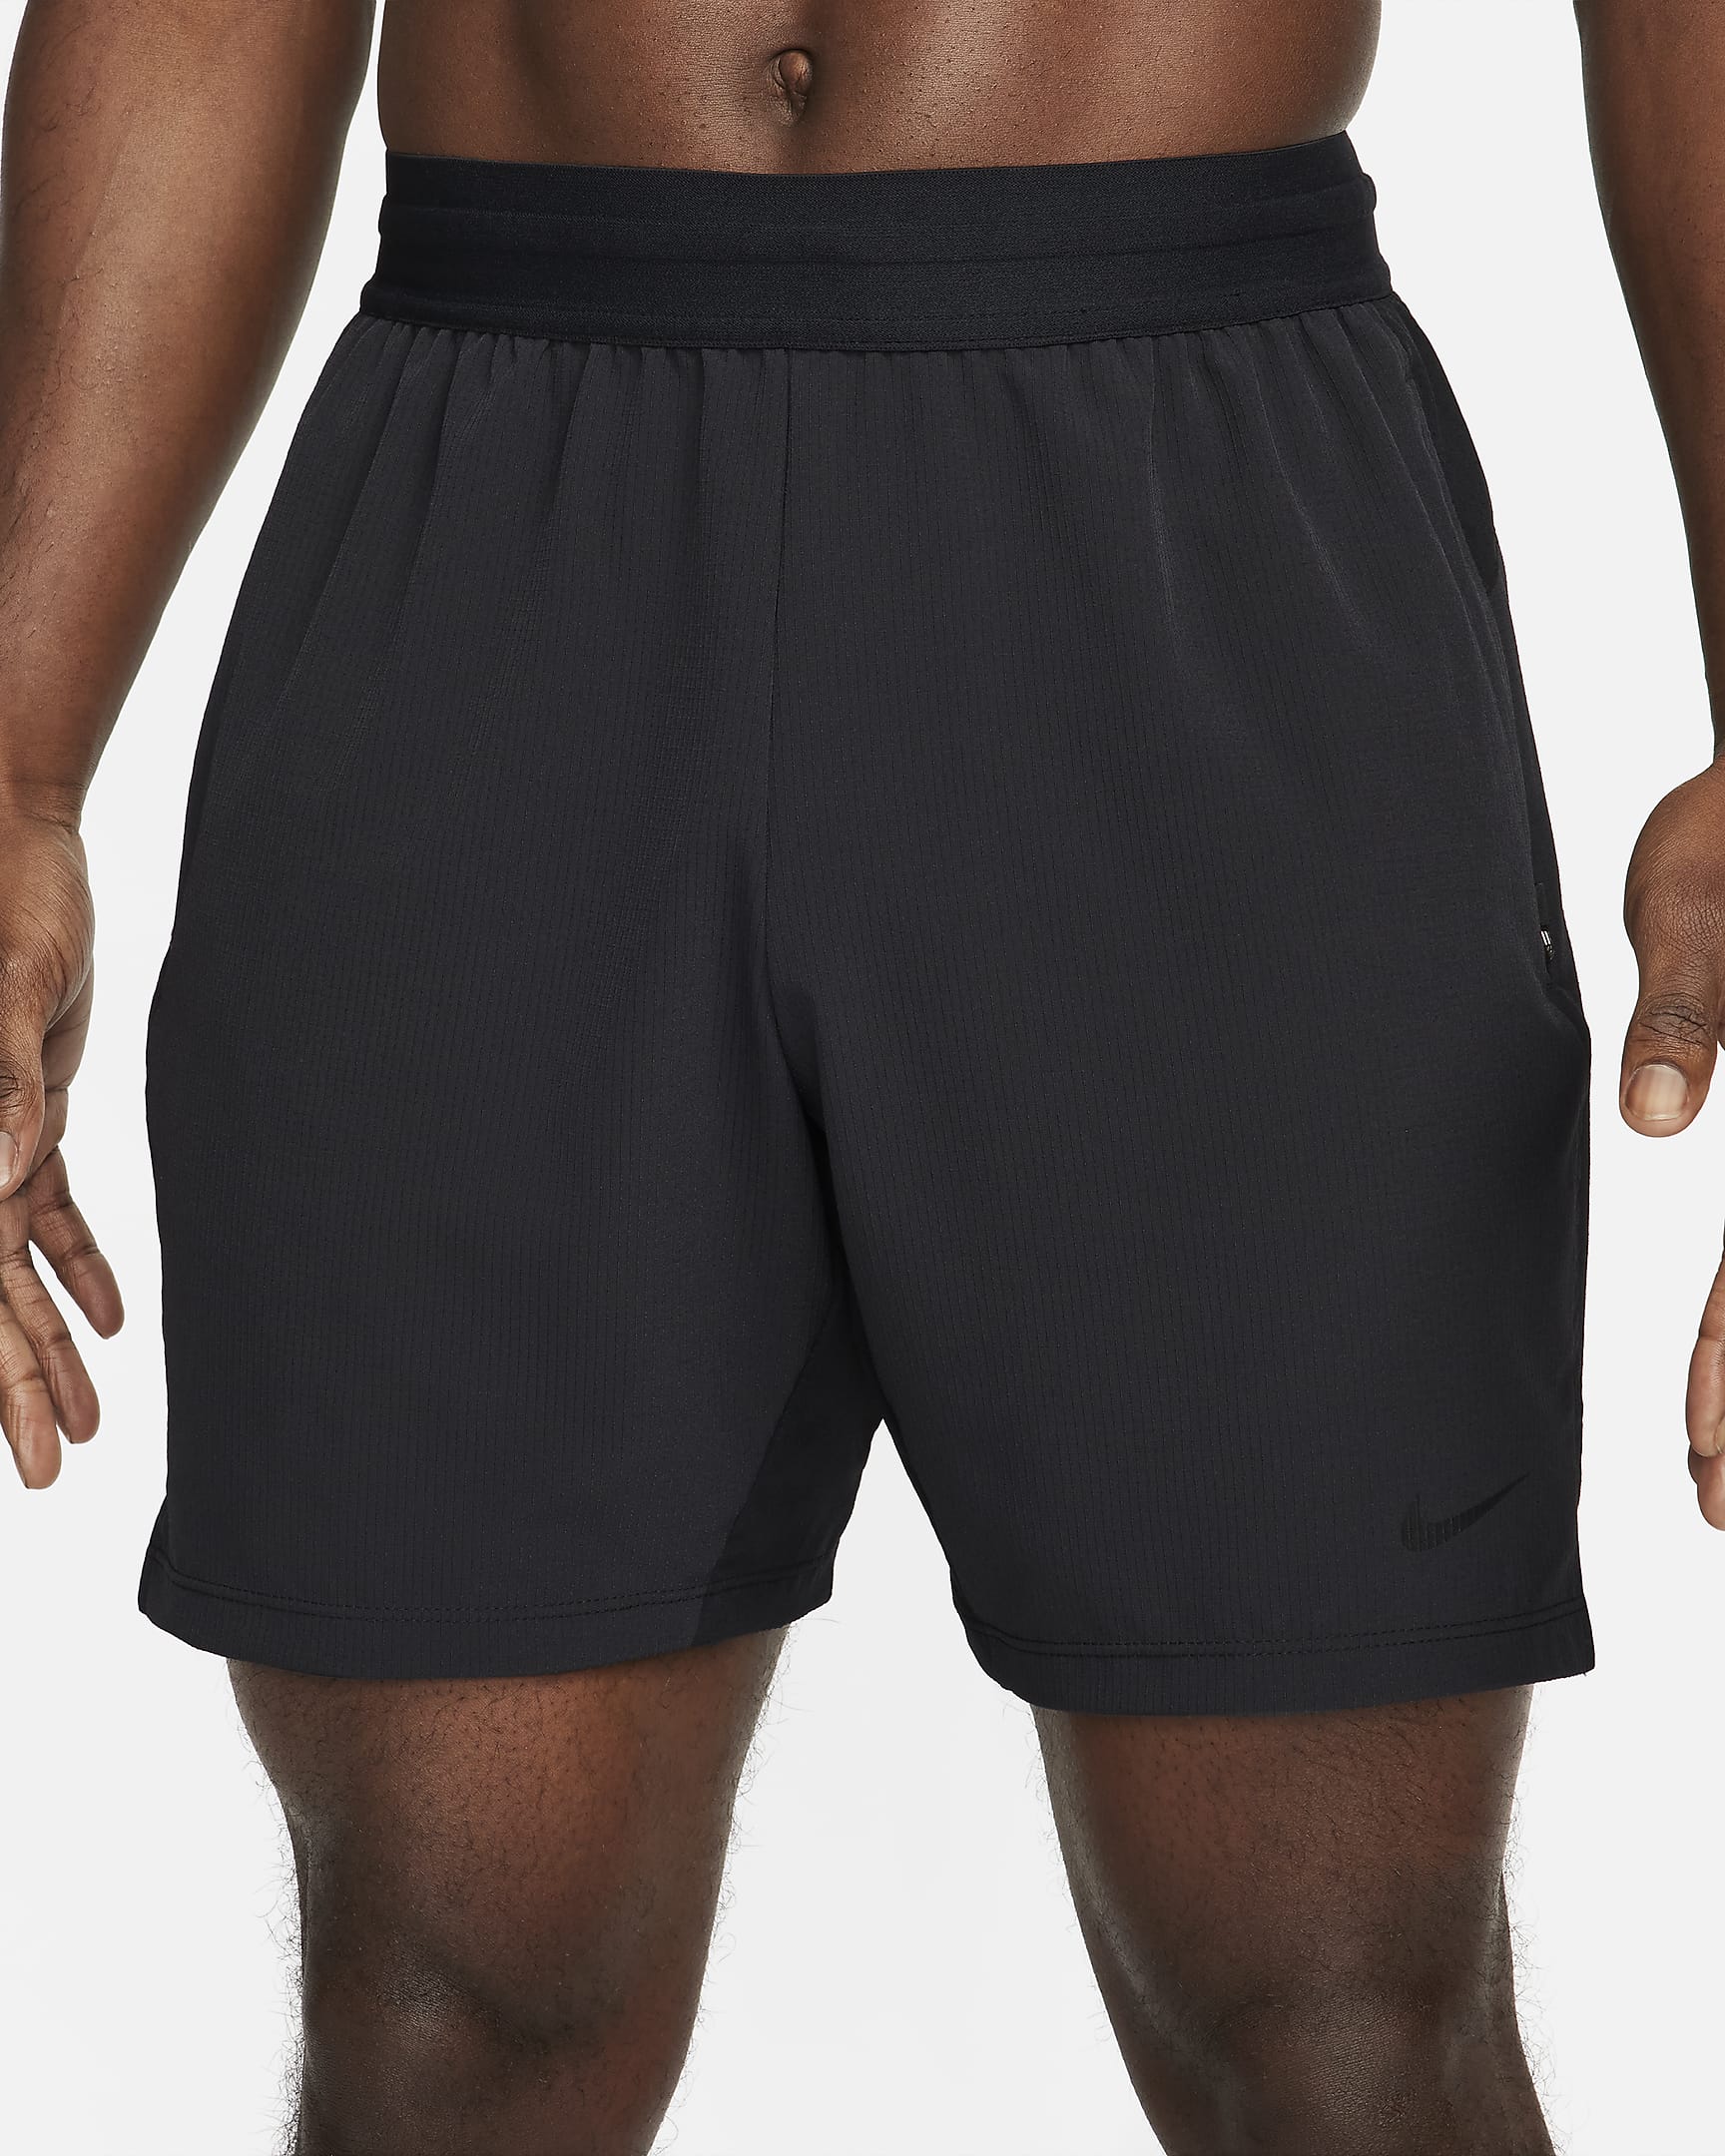 Nike Flex Rep 4.0 Men's Dri-FIT 18cm (approx.) Unlined Fitness Shorts - Black/Black/Black